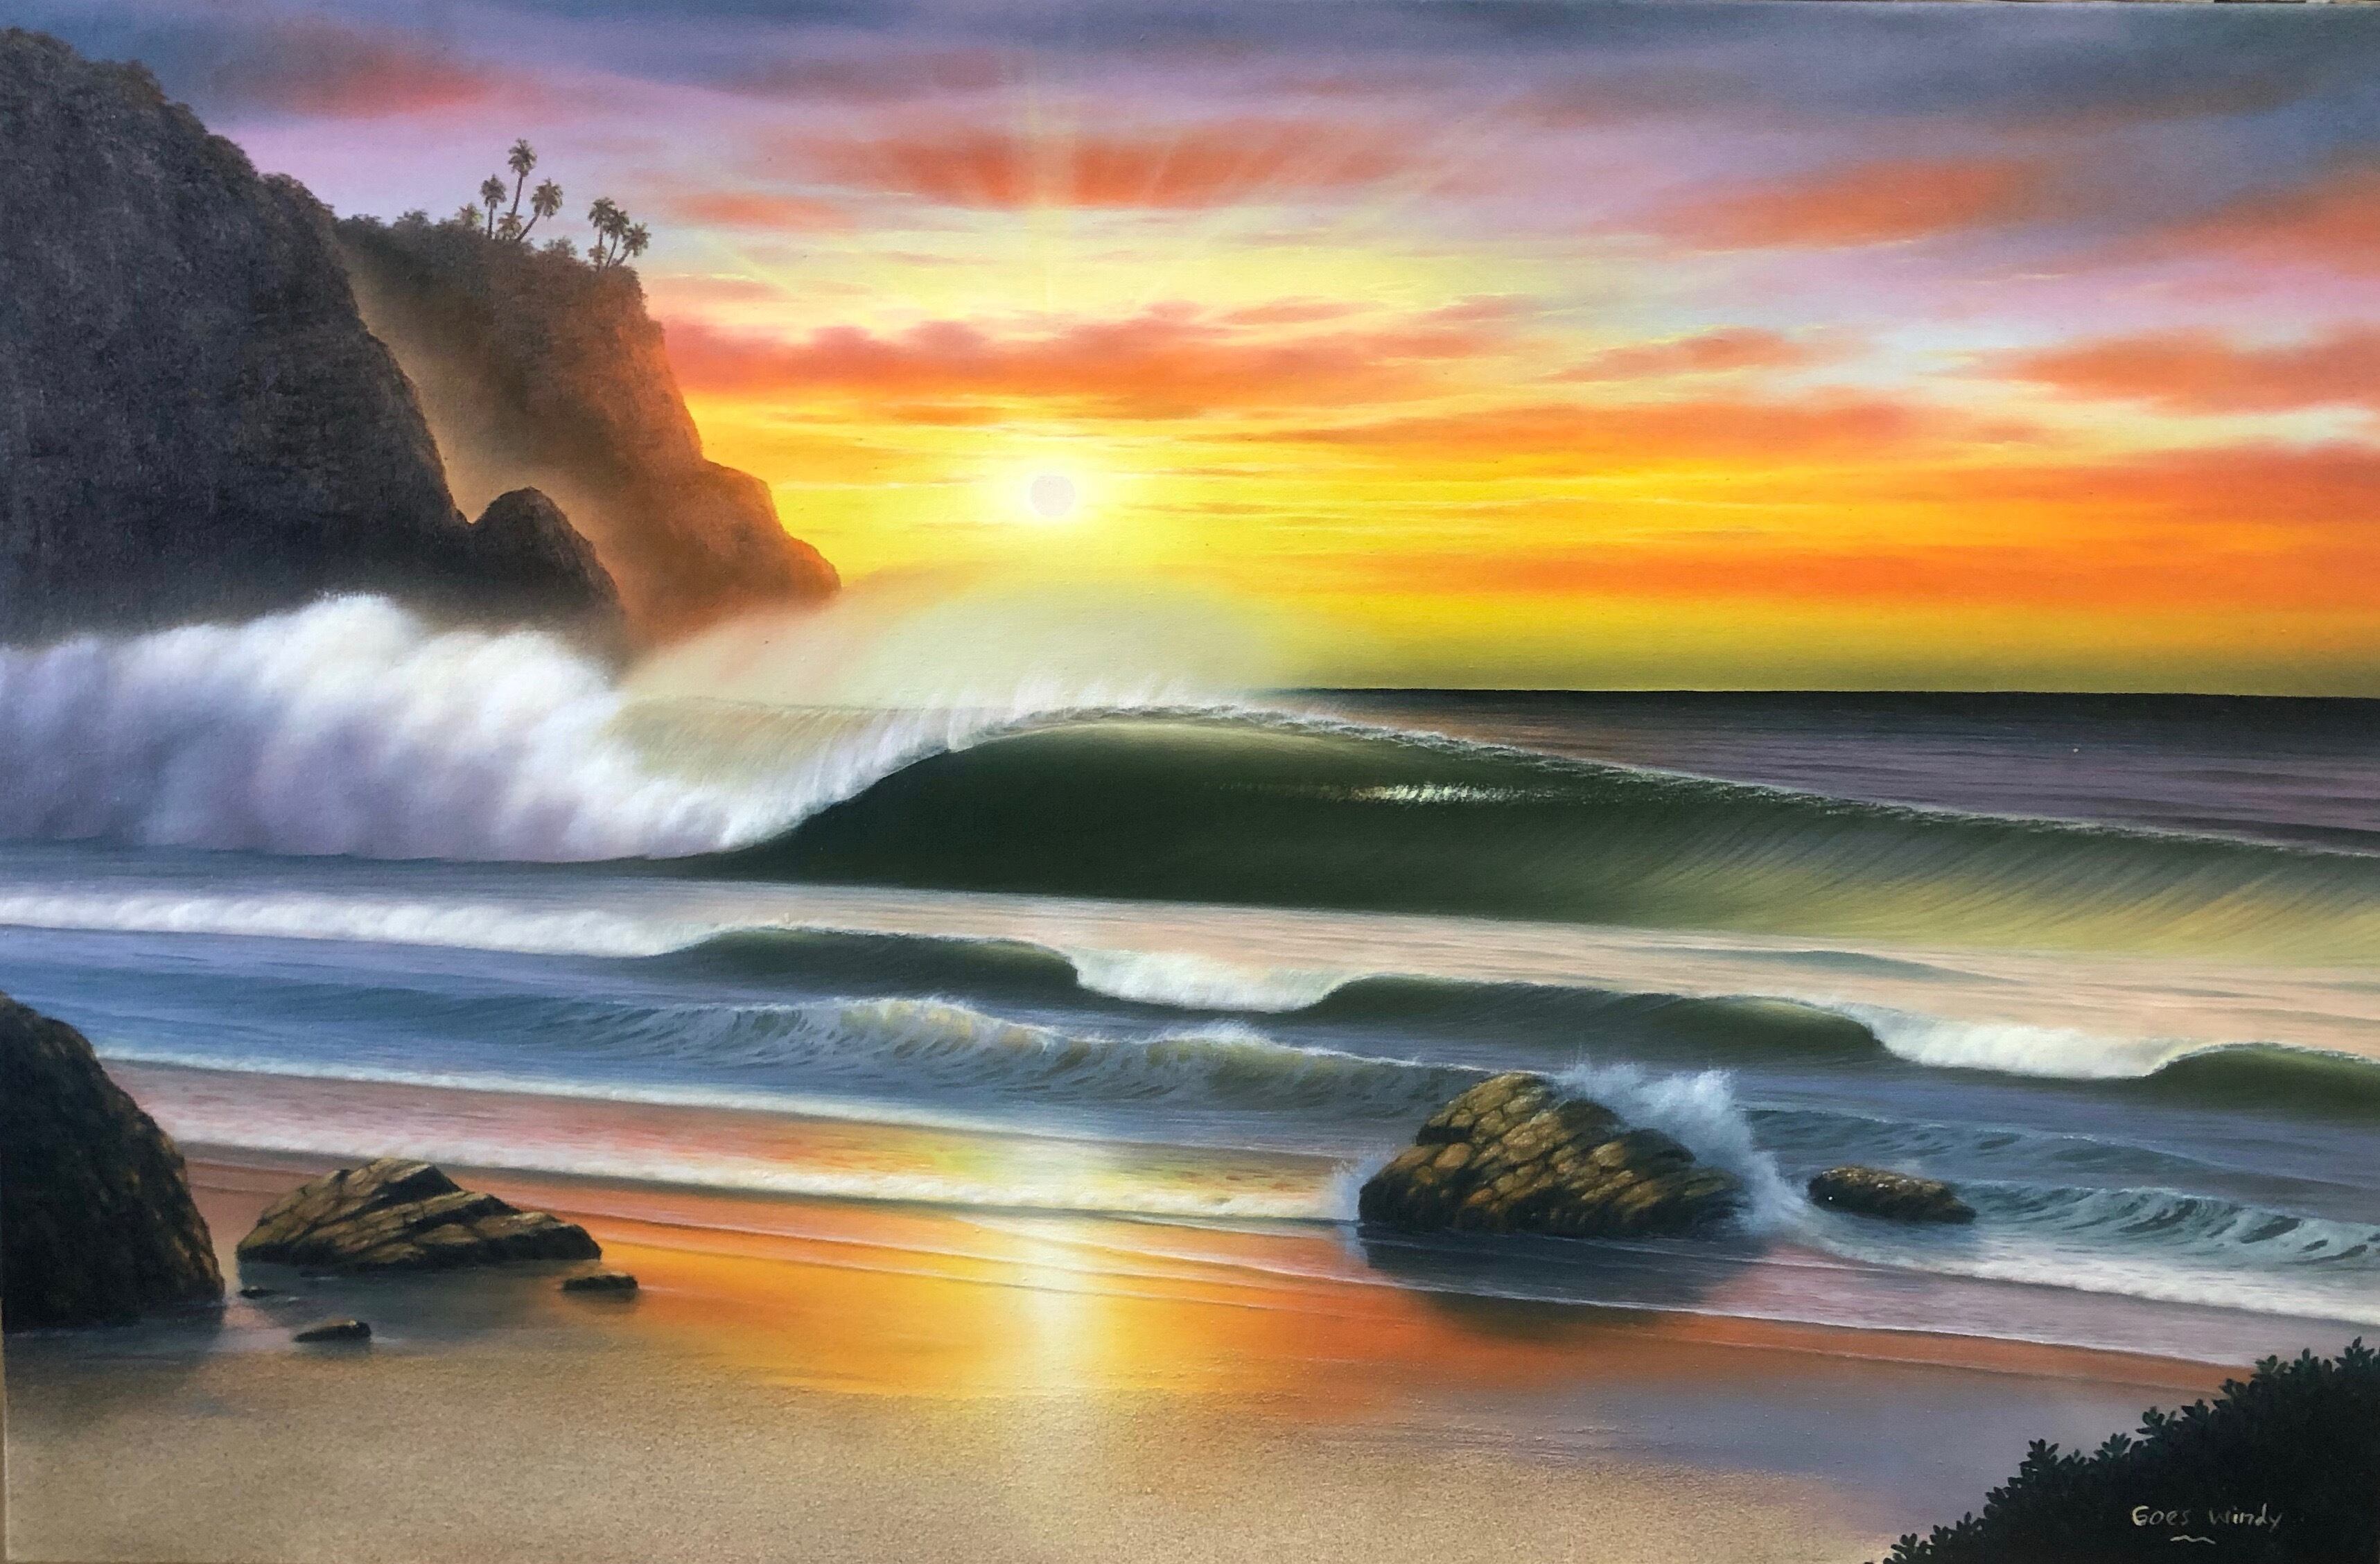 Dreamland Wave Art 特別製作品M40 with Real sand